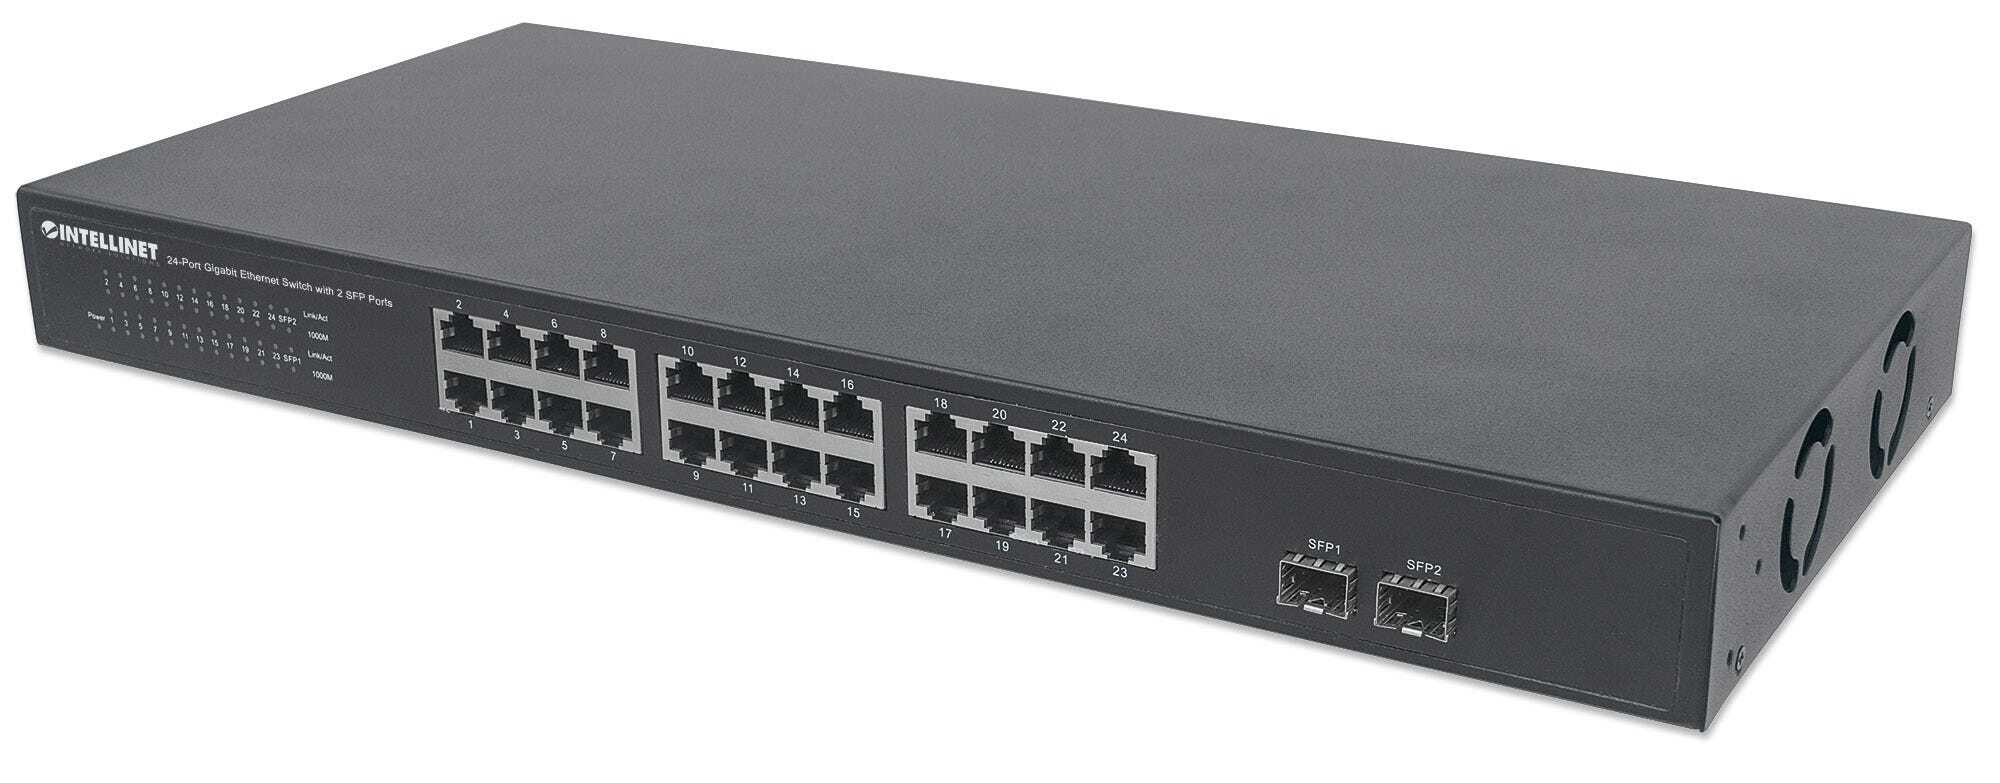 Intellinet 24-Port Gigabit Ethernet Switch with 2 SFP Ports, 24 x 10/100/1000 Mbps RJ45 Ports + 2 x SFP, IEEE 802.3az (Energy Efficient Ethernet), 19" Rackmount, Metal (Euro 2-pin plug)